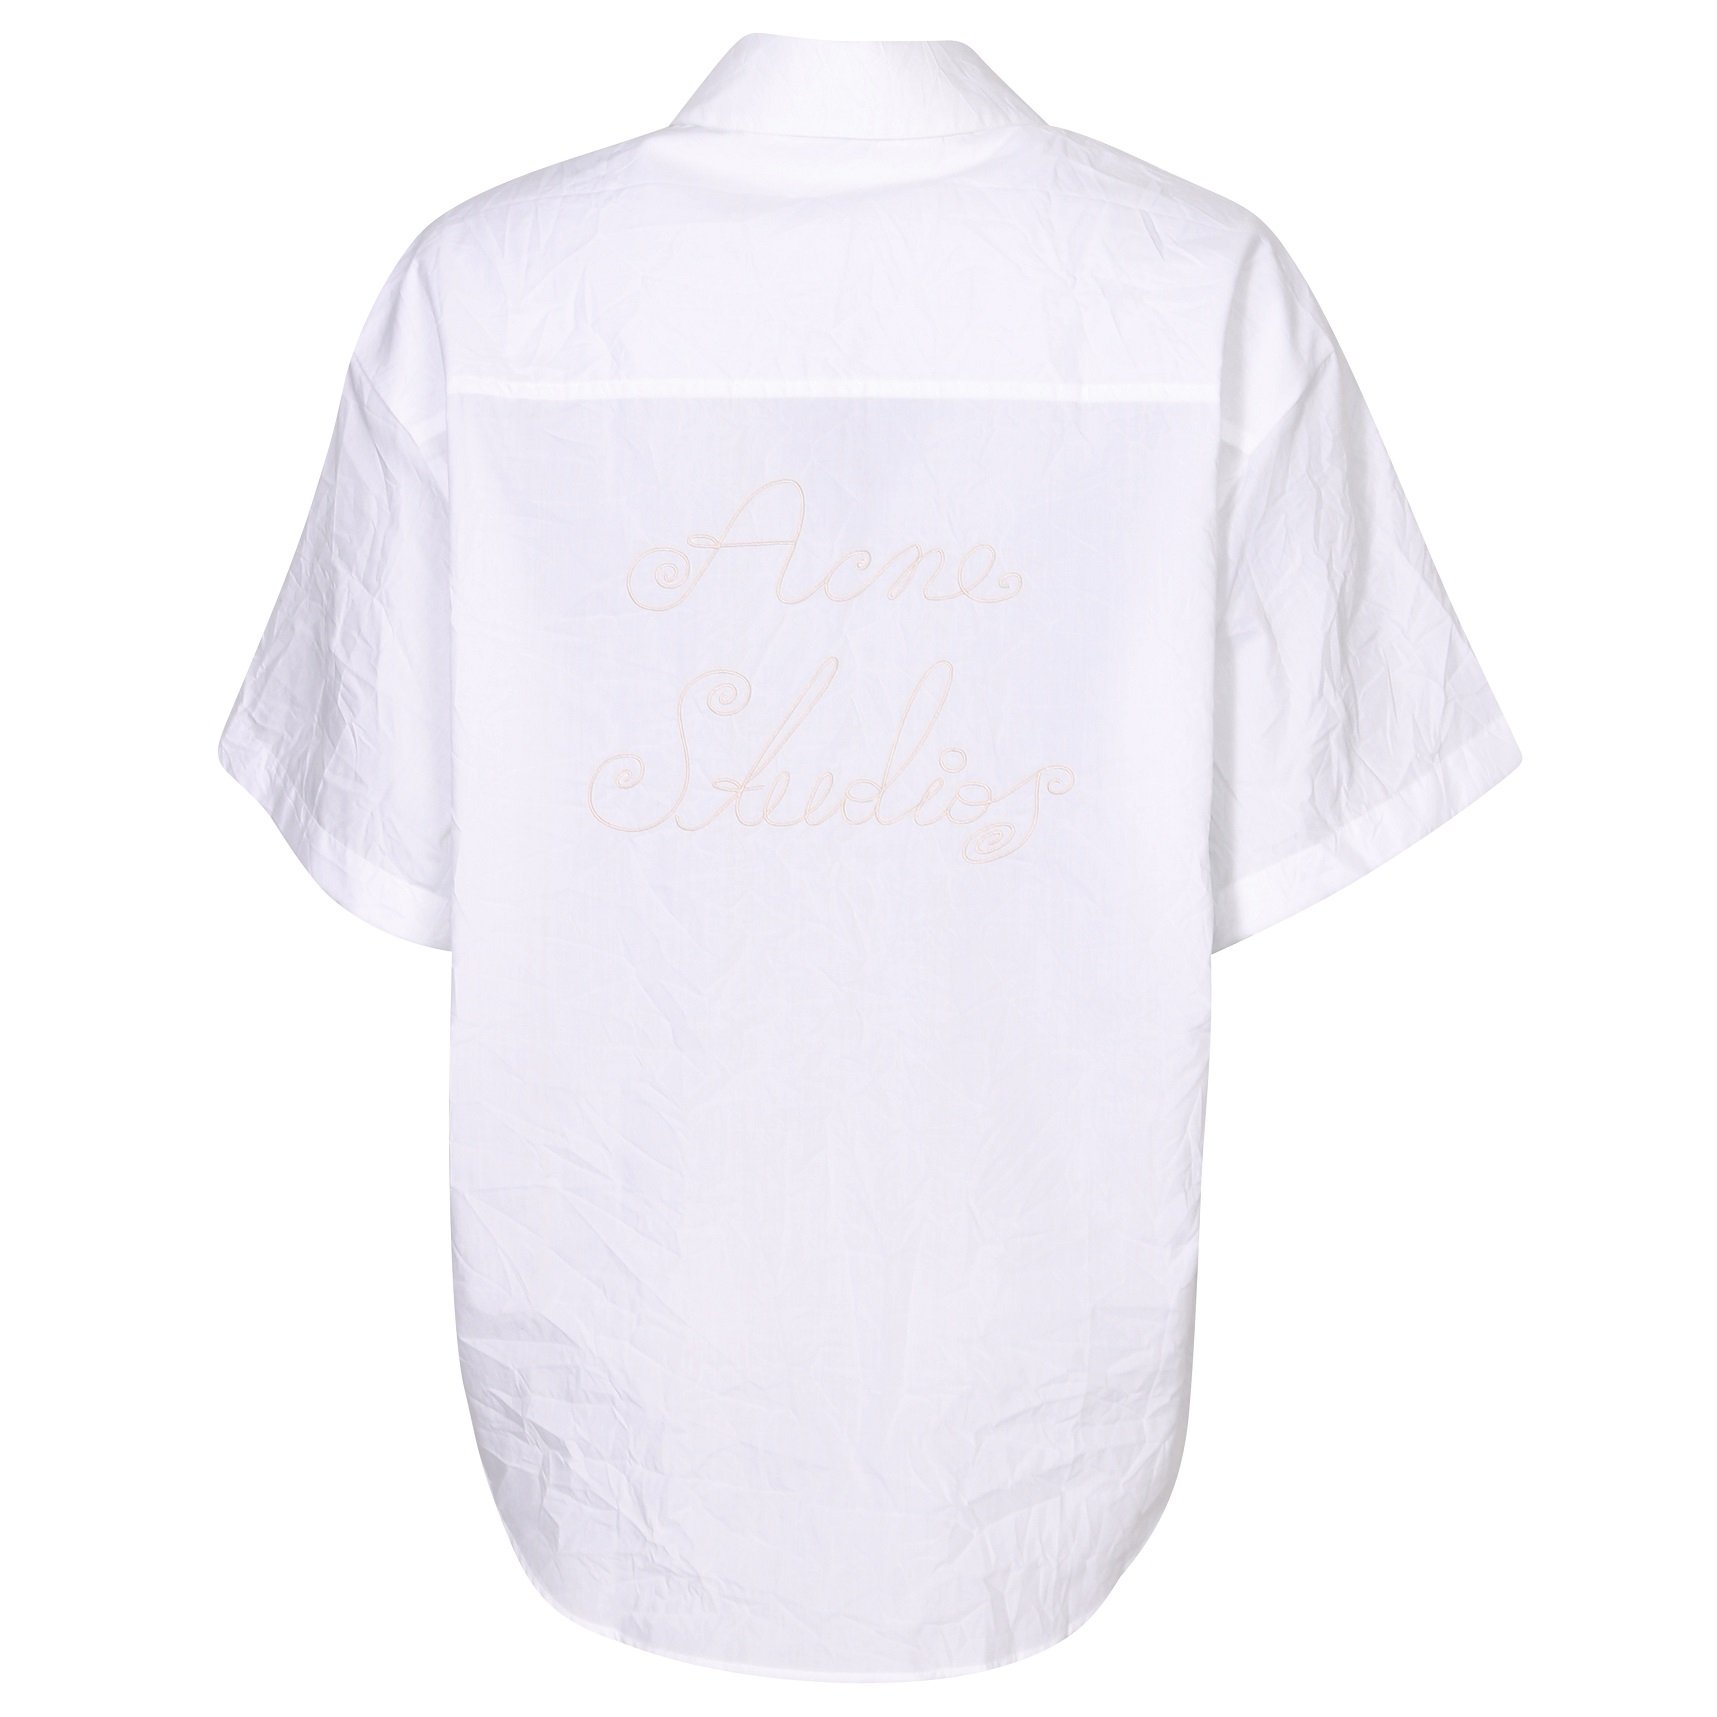 ACNE STUDIOS White Shirt Back Stitched 38